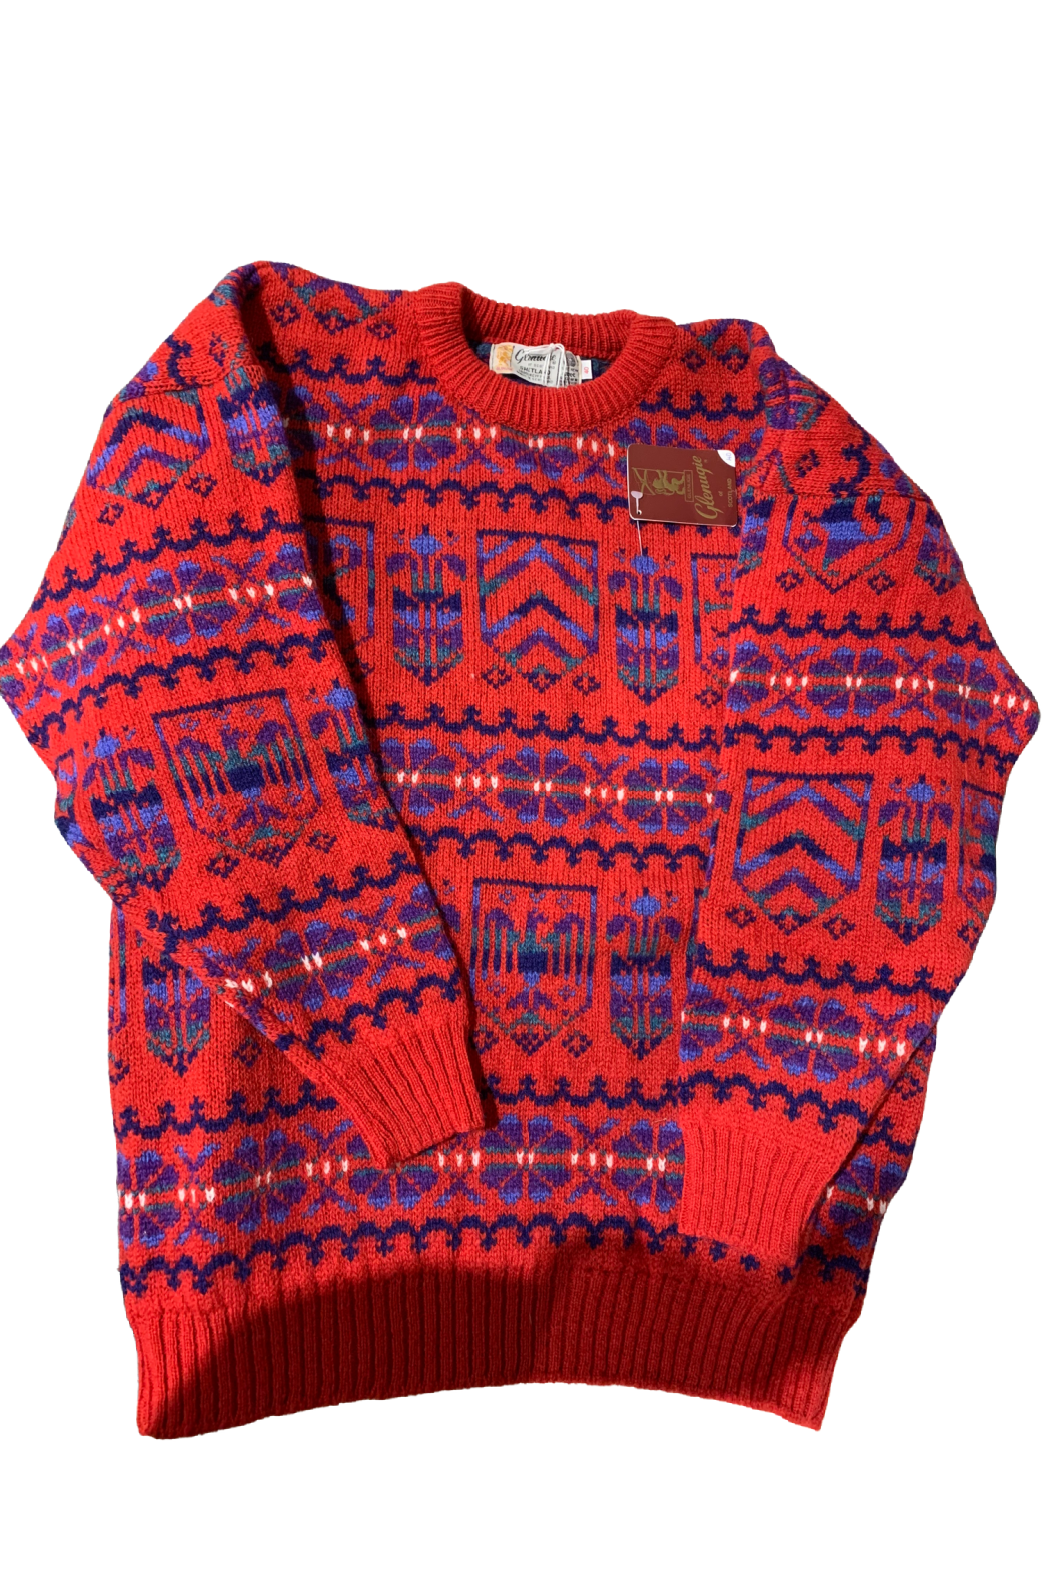 Glenugie Crew Neck Sweater